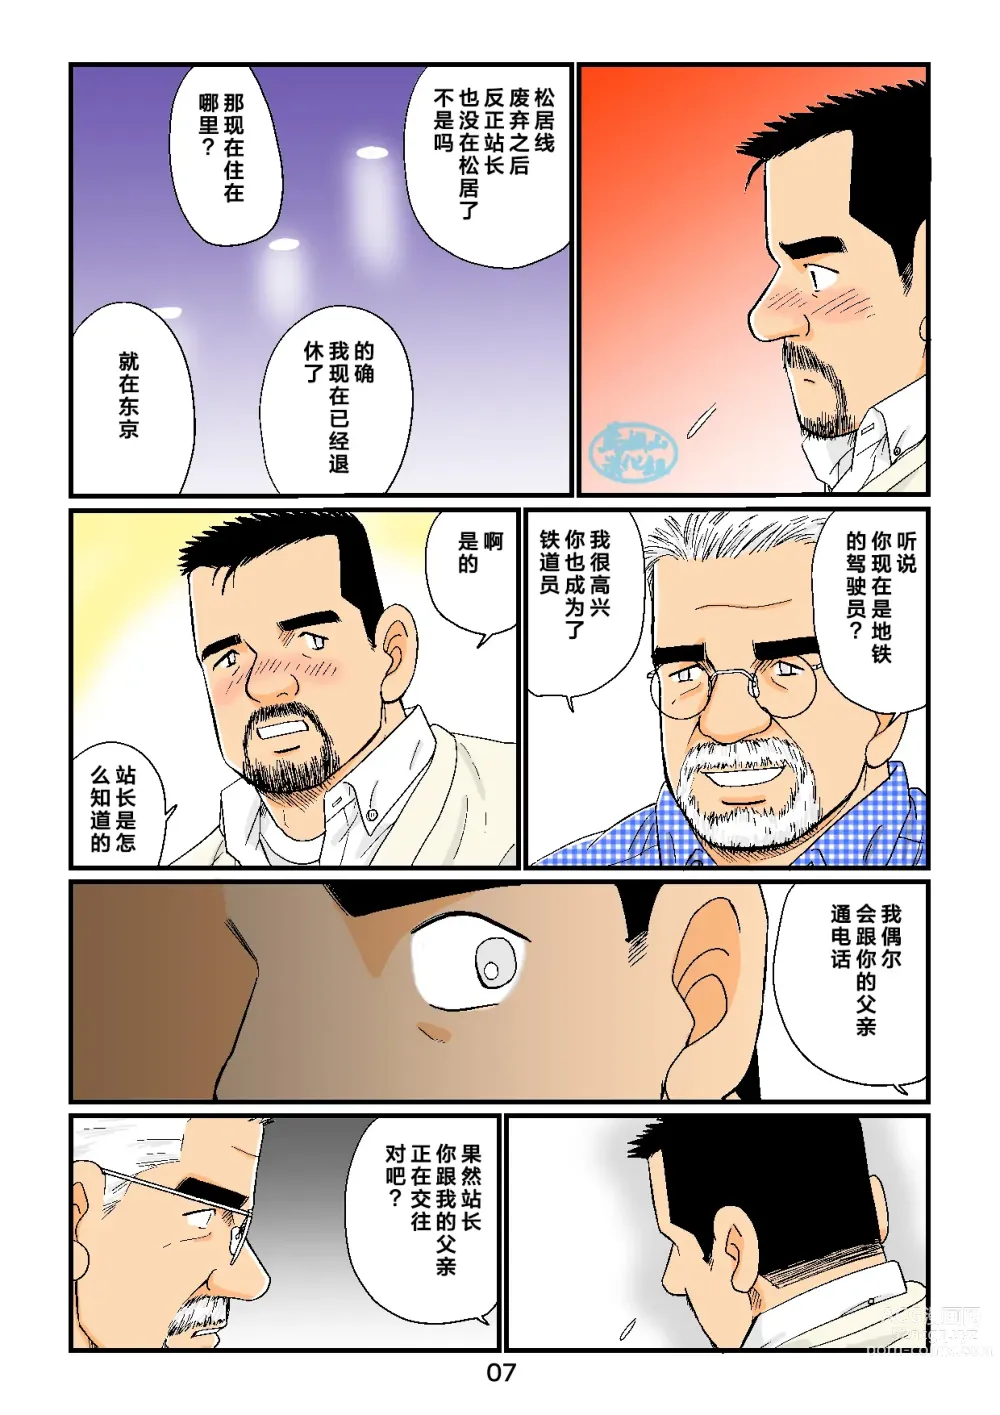 Page 7 of manga 「铁道员的浪漫」 第三回 站长与铁道员之夜